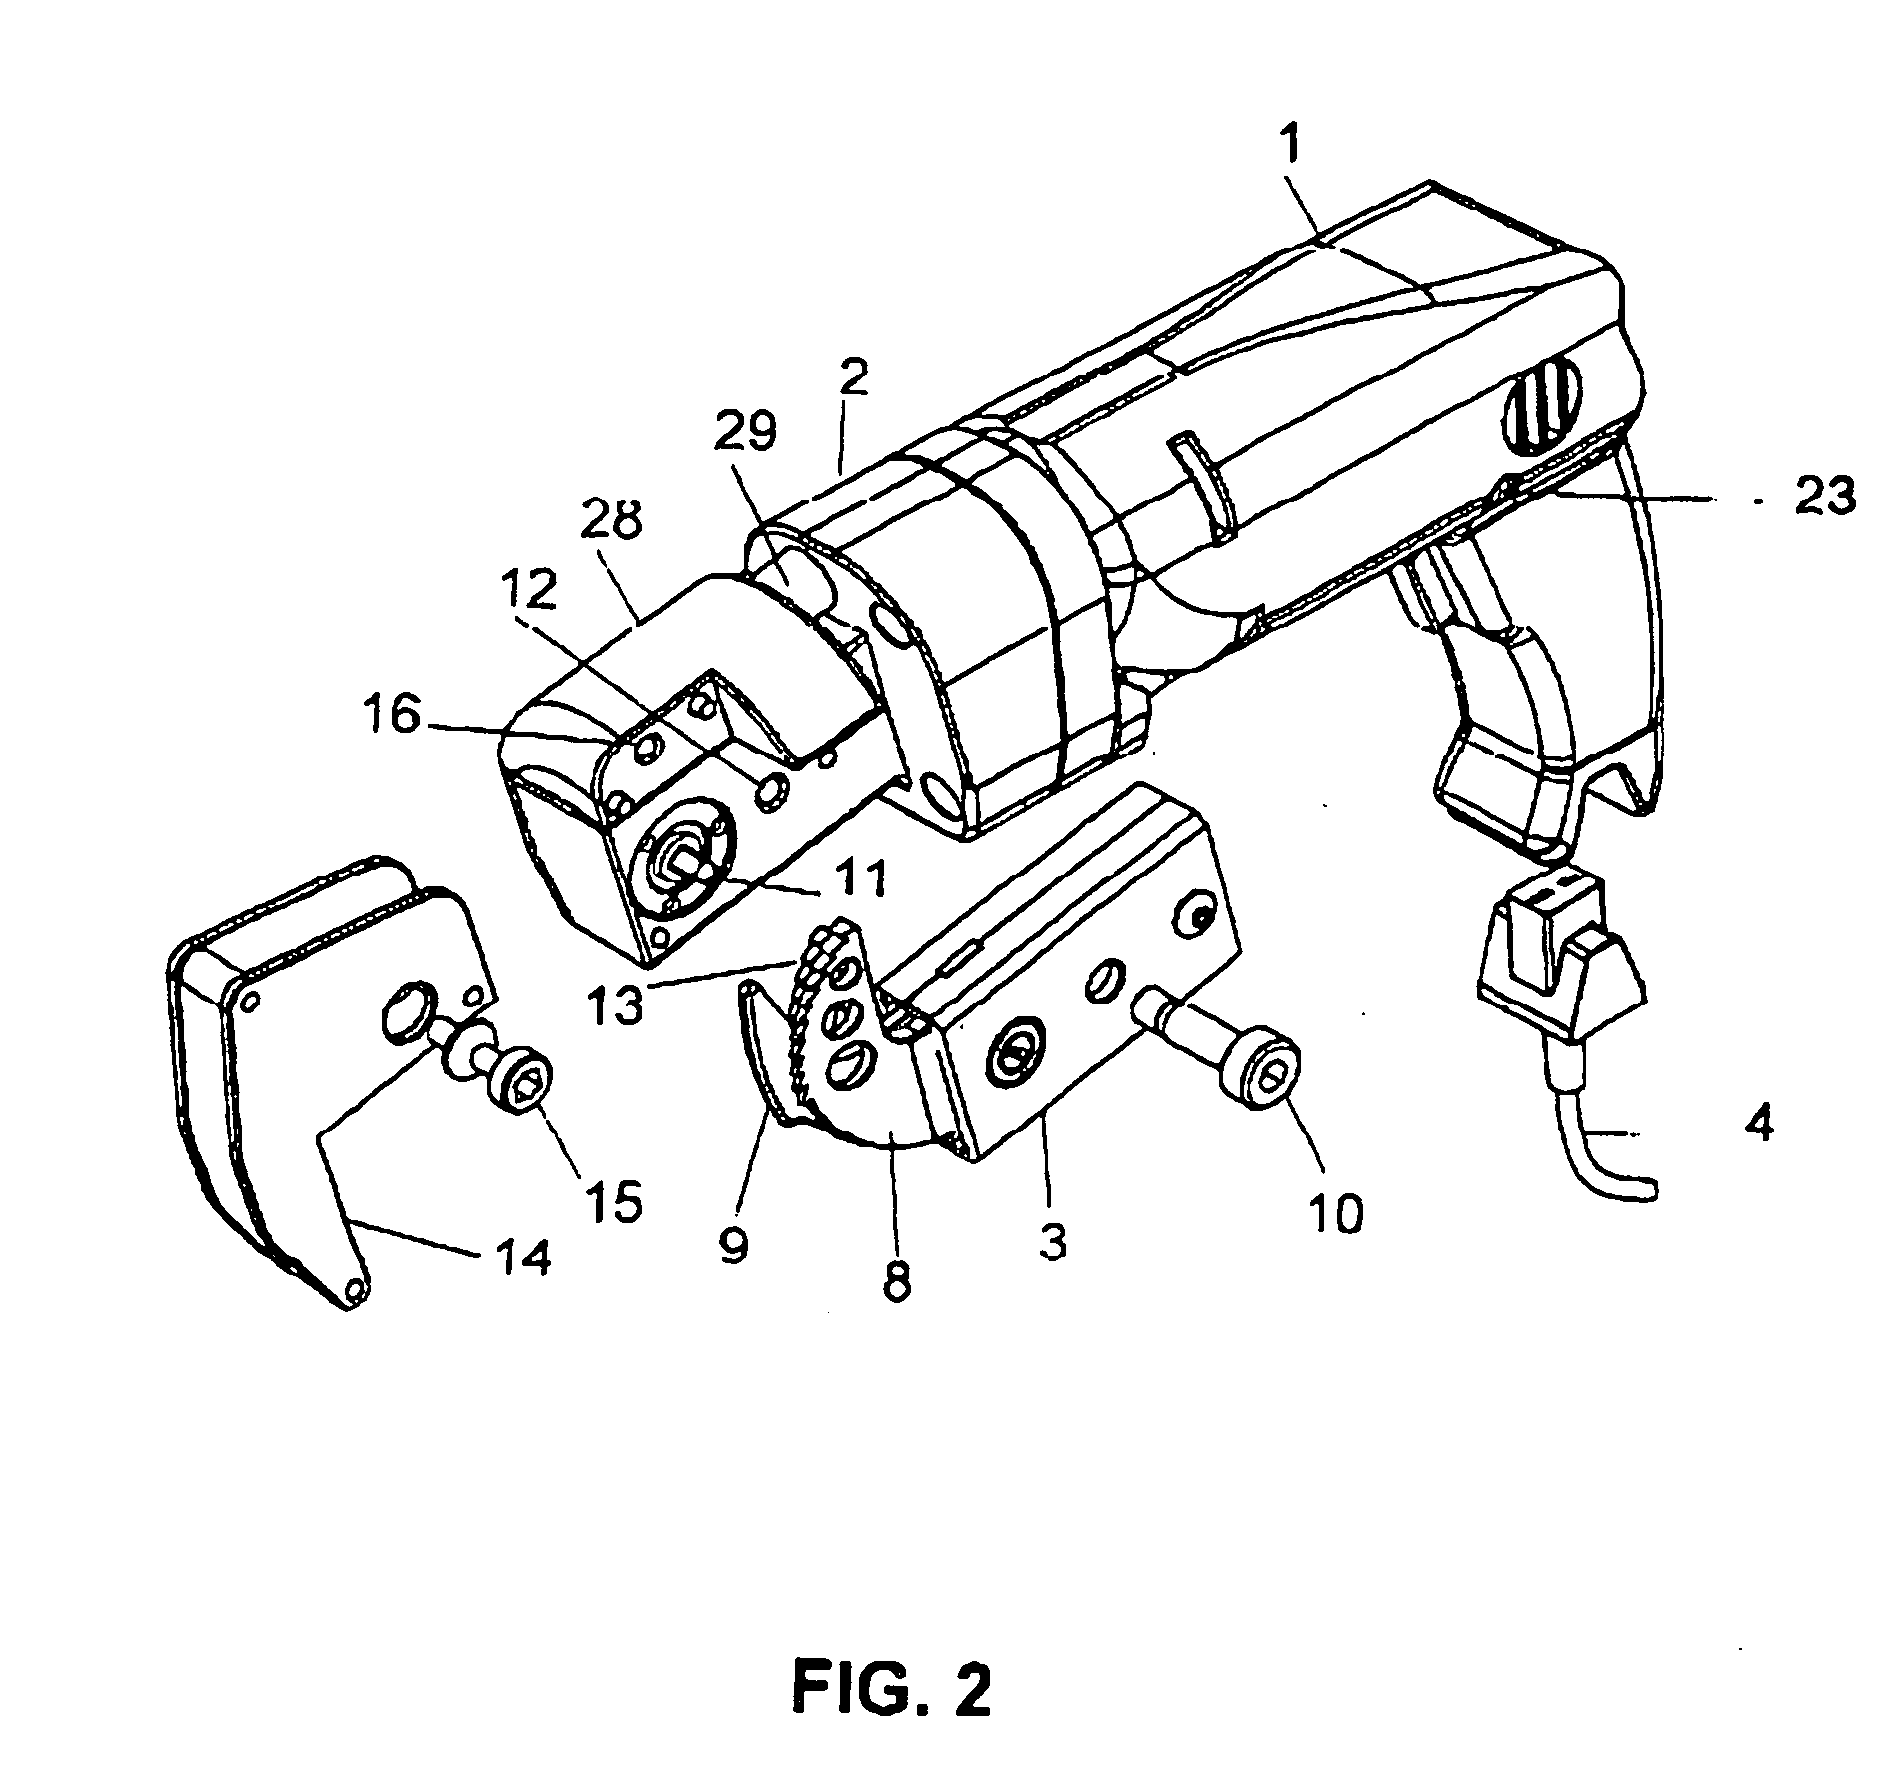 Motor-driven cutting device